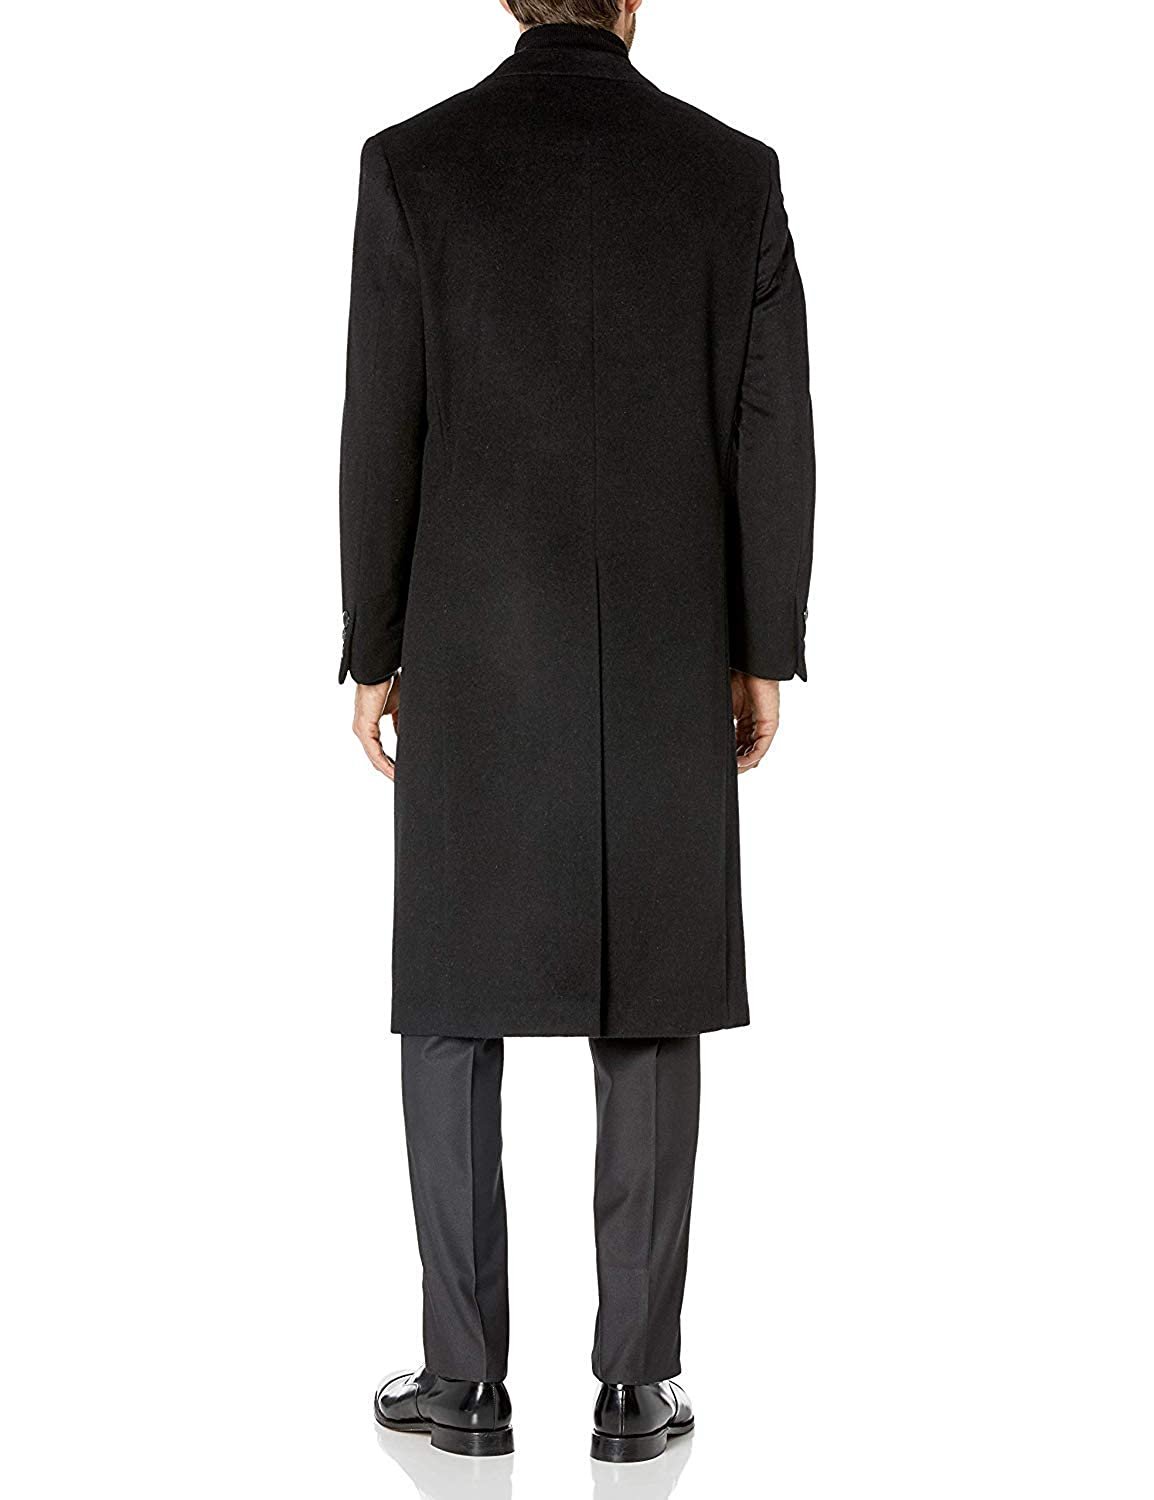 Men's Single Breasted Luxury Wool/Cashmere Full Length Topcoat | eBay